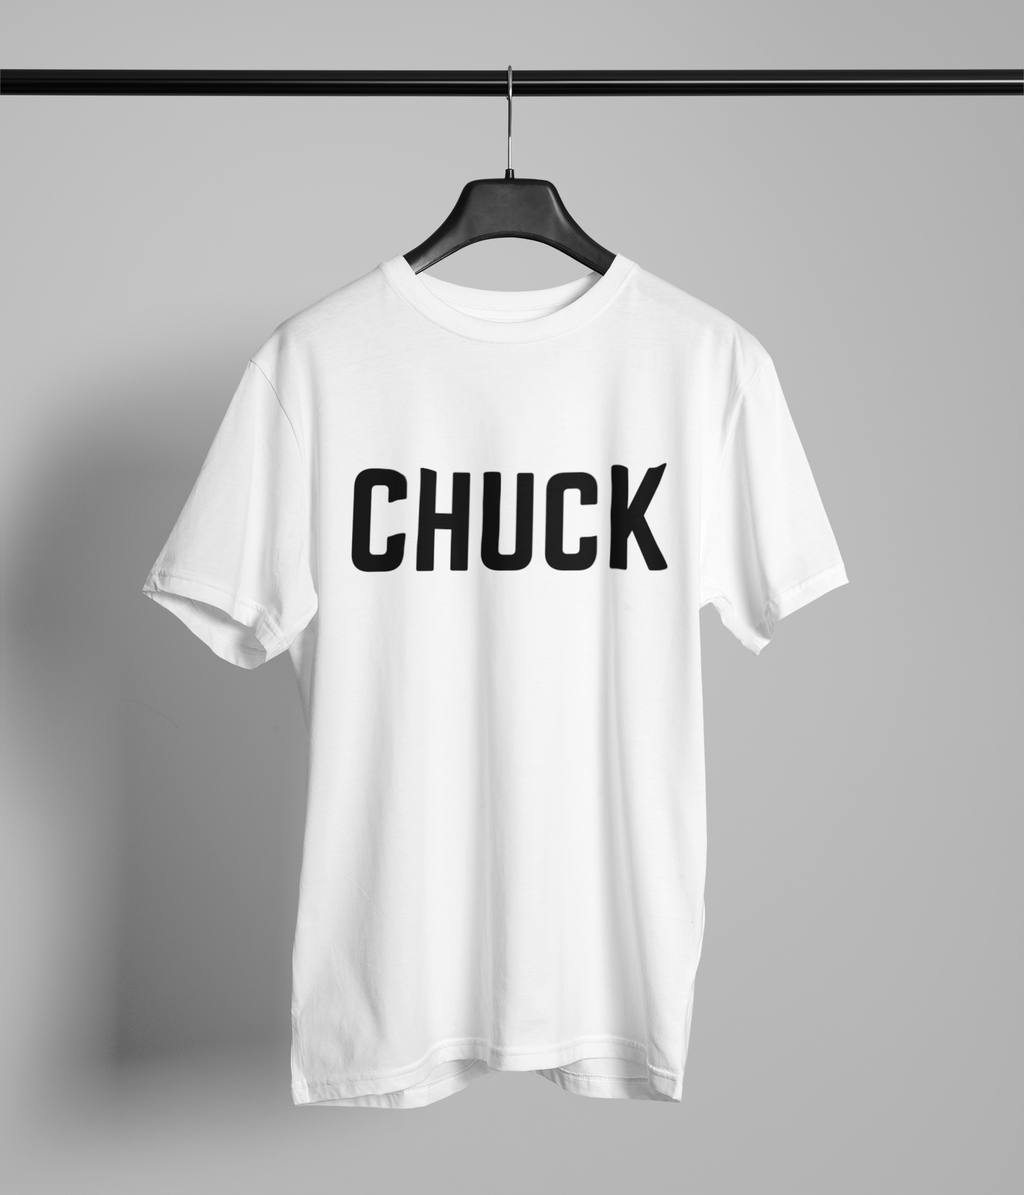 CHUCK Northern Slang T-Shirt Unisex